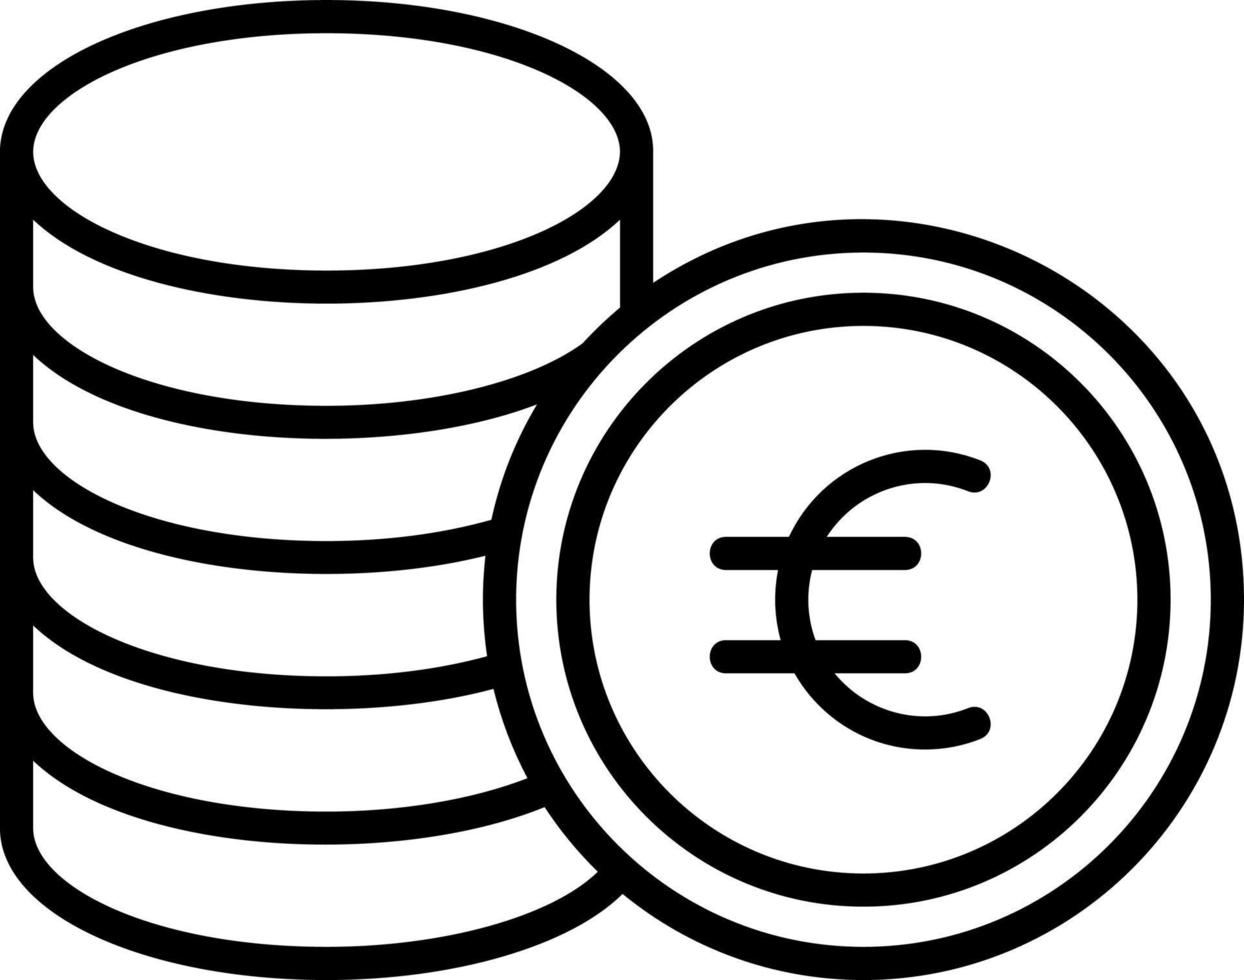 Euro moneta vettore icona design